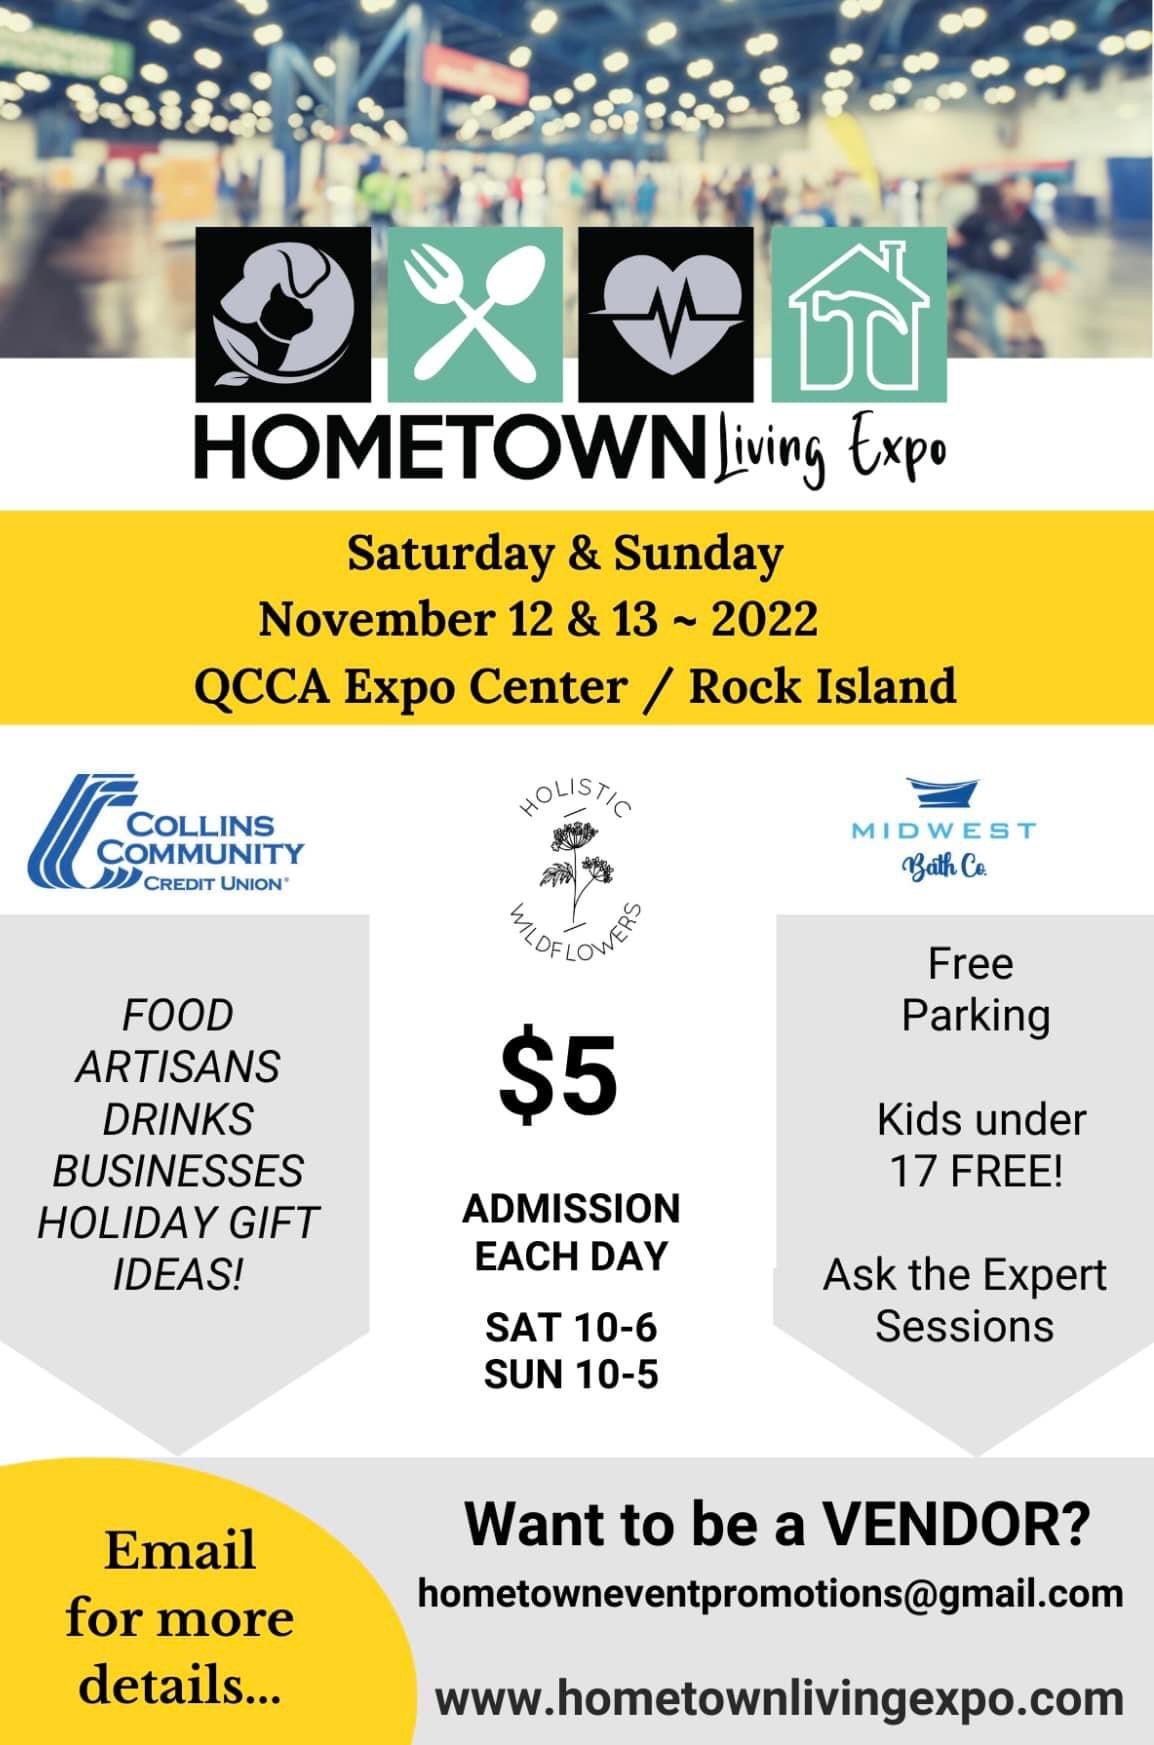 Hometown Living Expo Hits Rock Island November 12-13